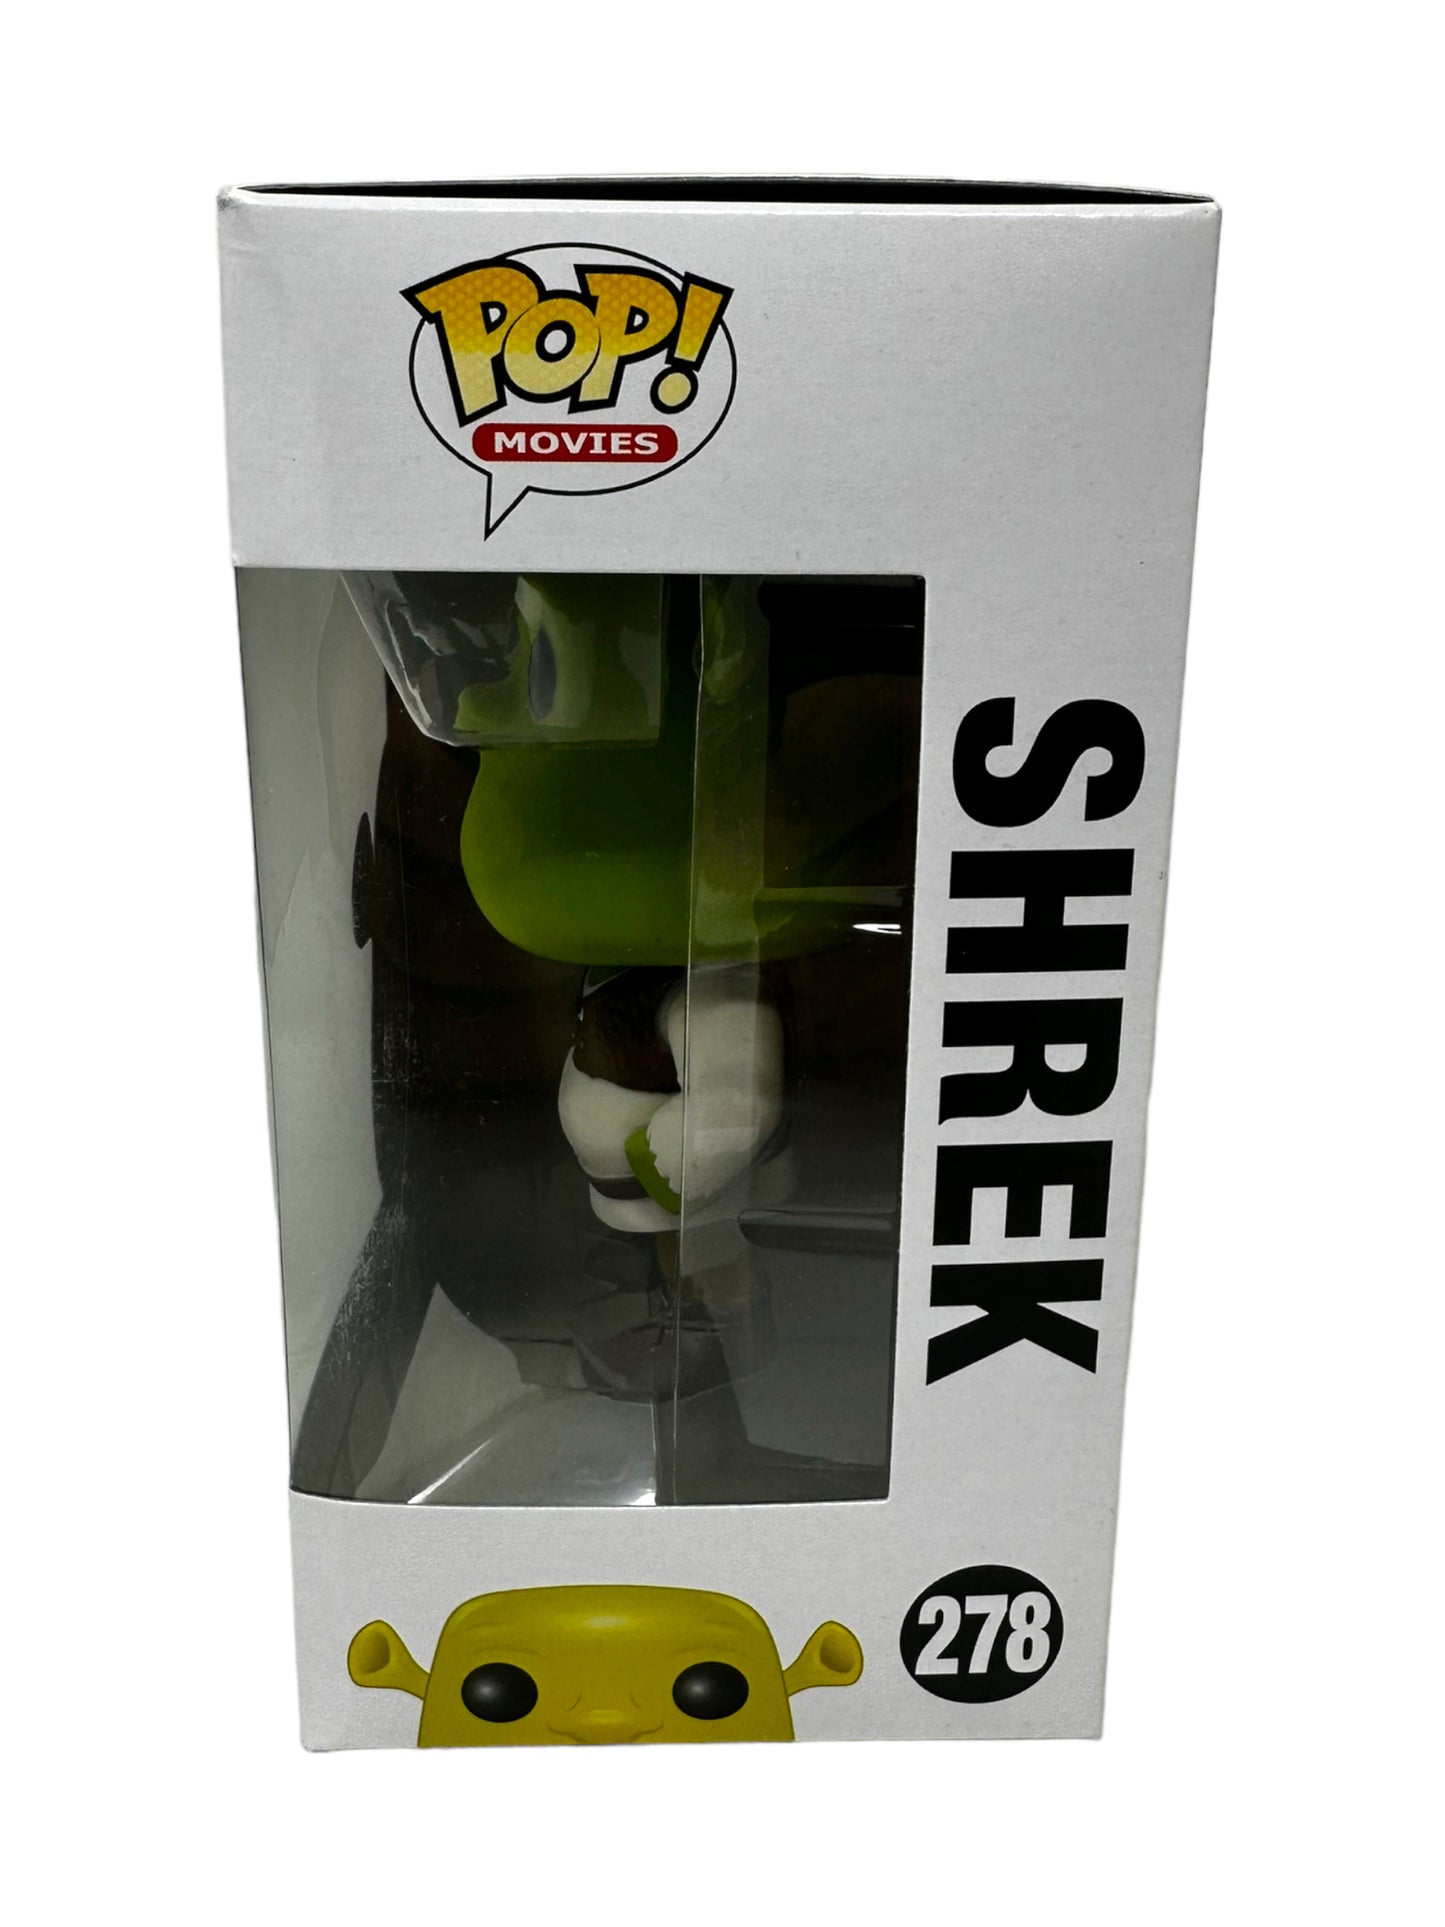 Sold 2015/16 Shrek, Donkey, Puss in Boots Bundle!